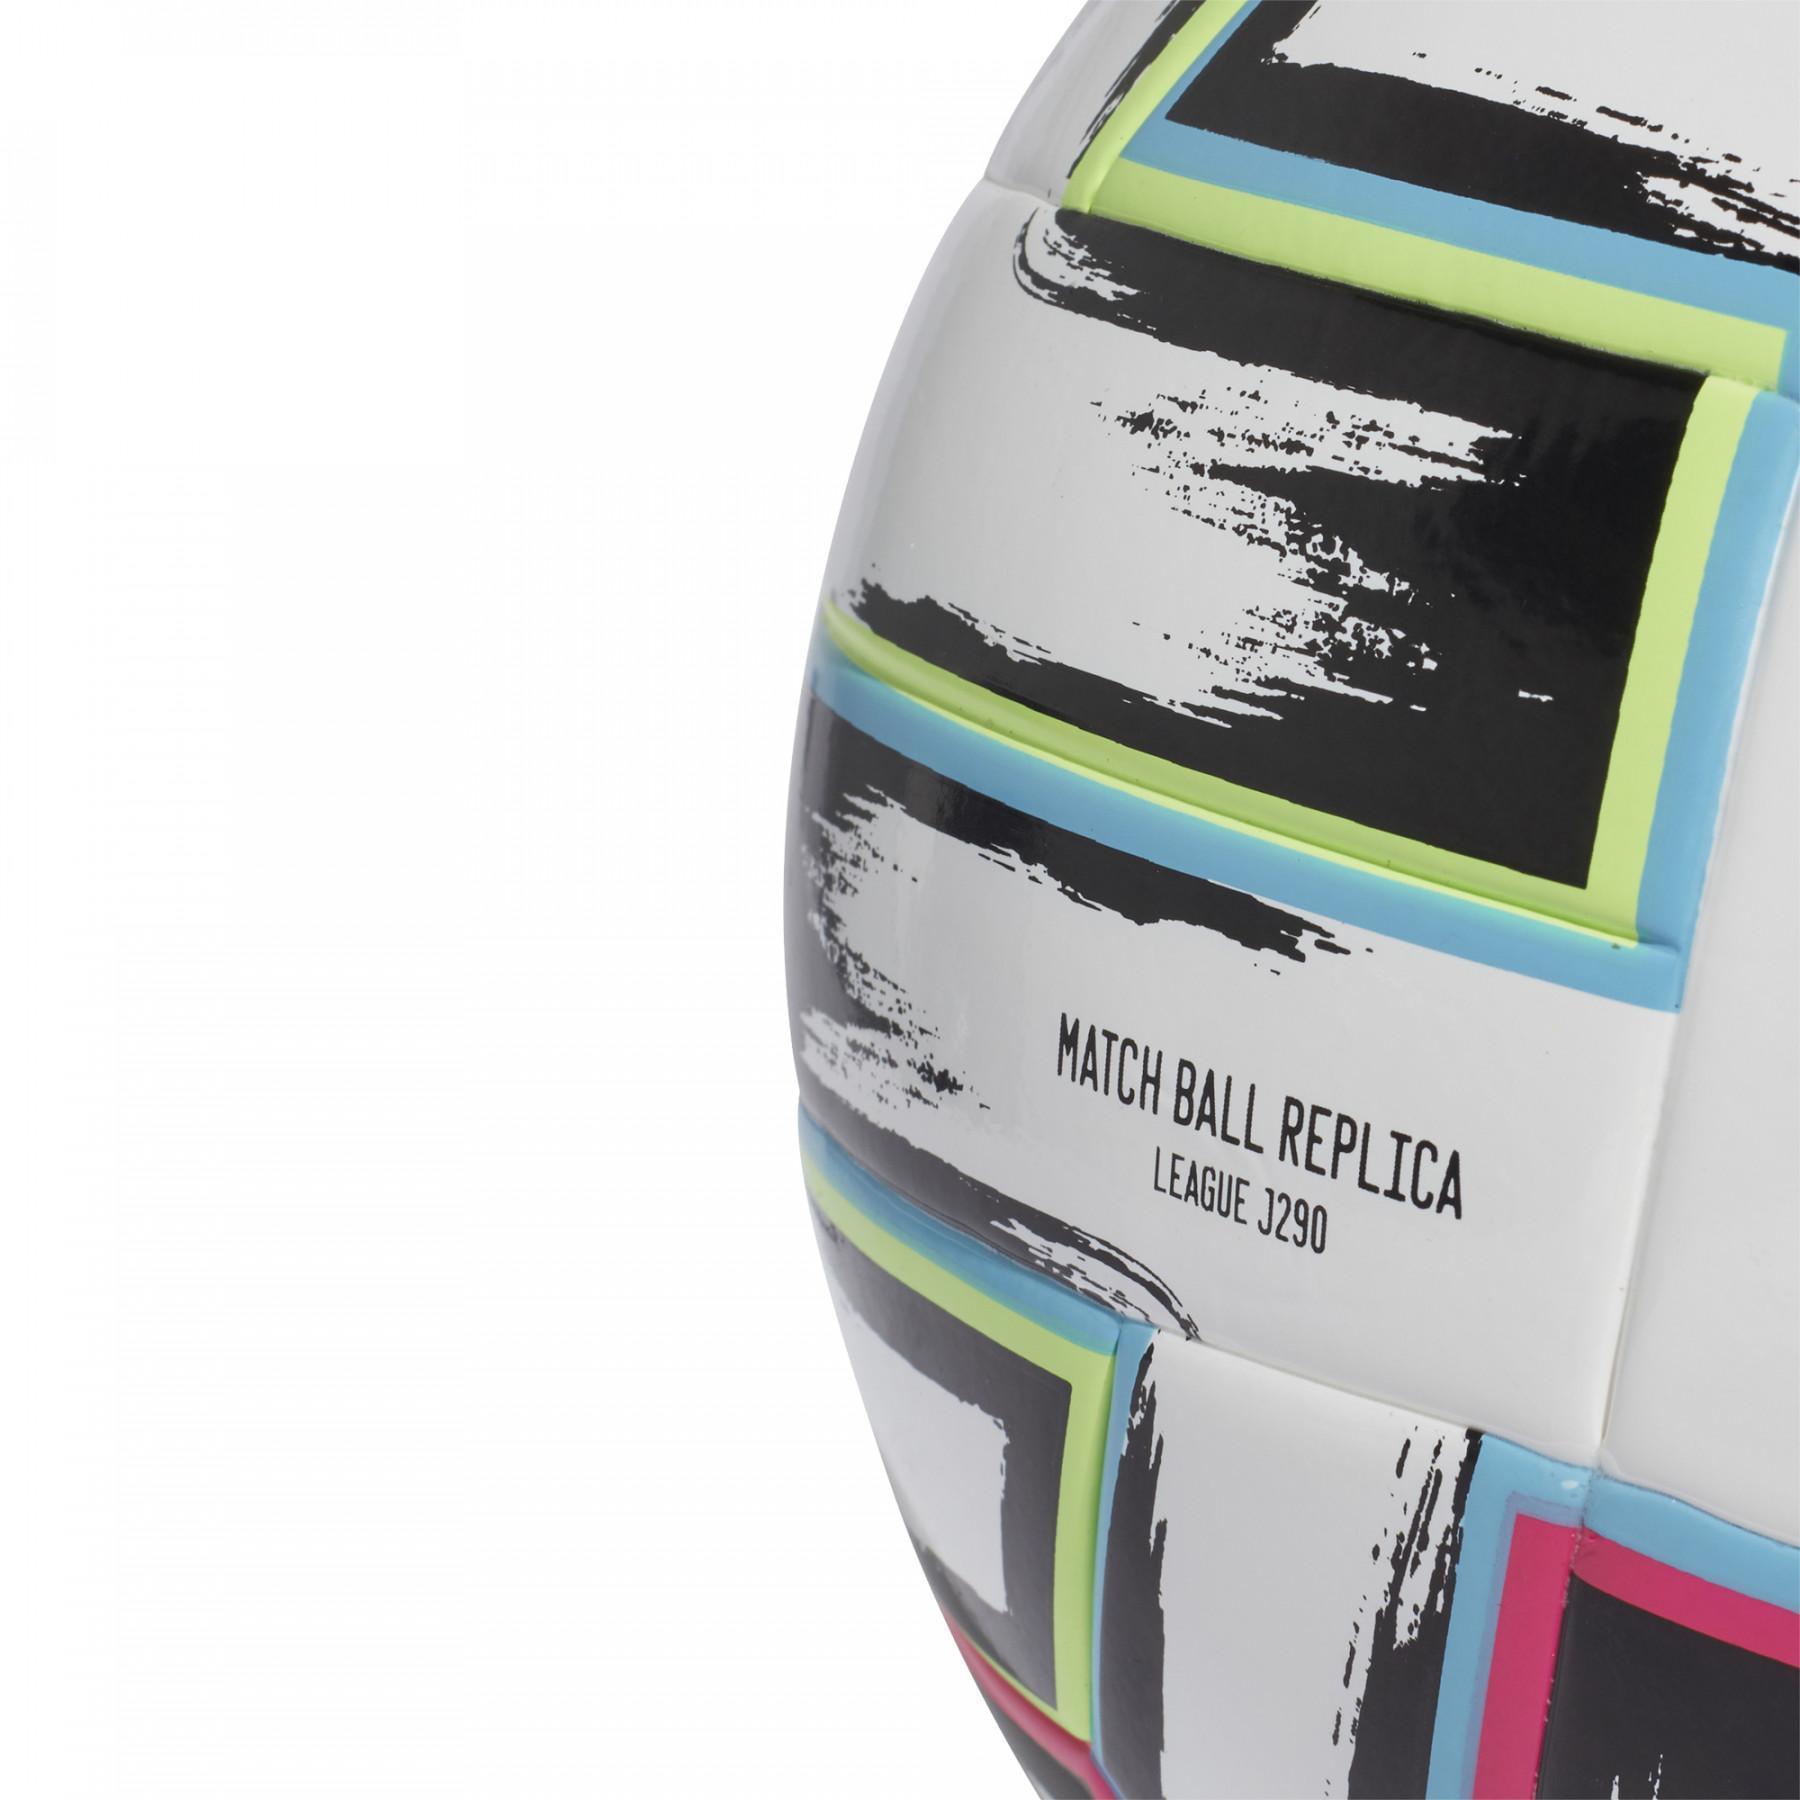 Barnens bal adidas Uniforia League J290